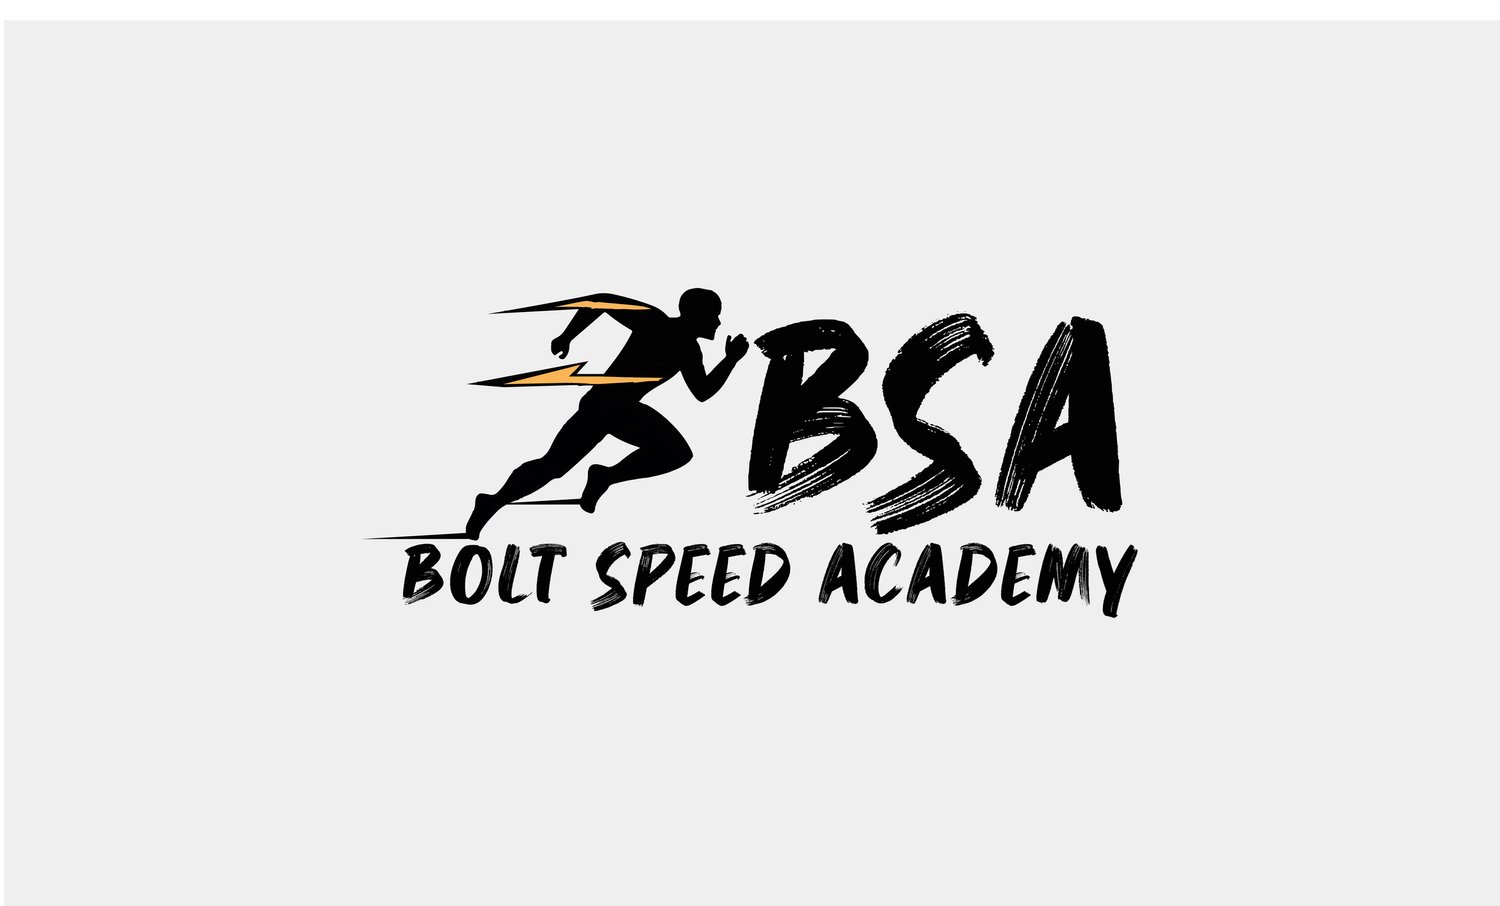 Bolt Speed Academy